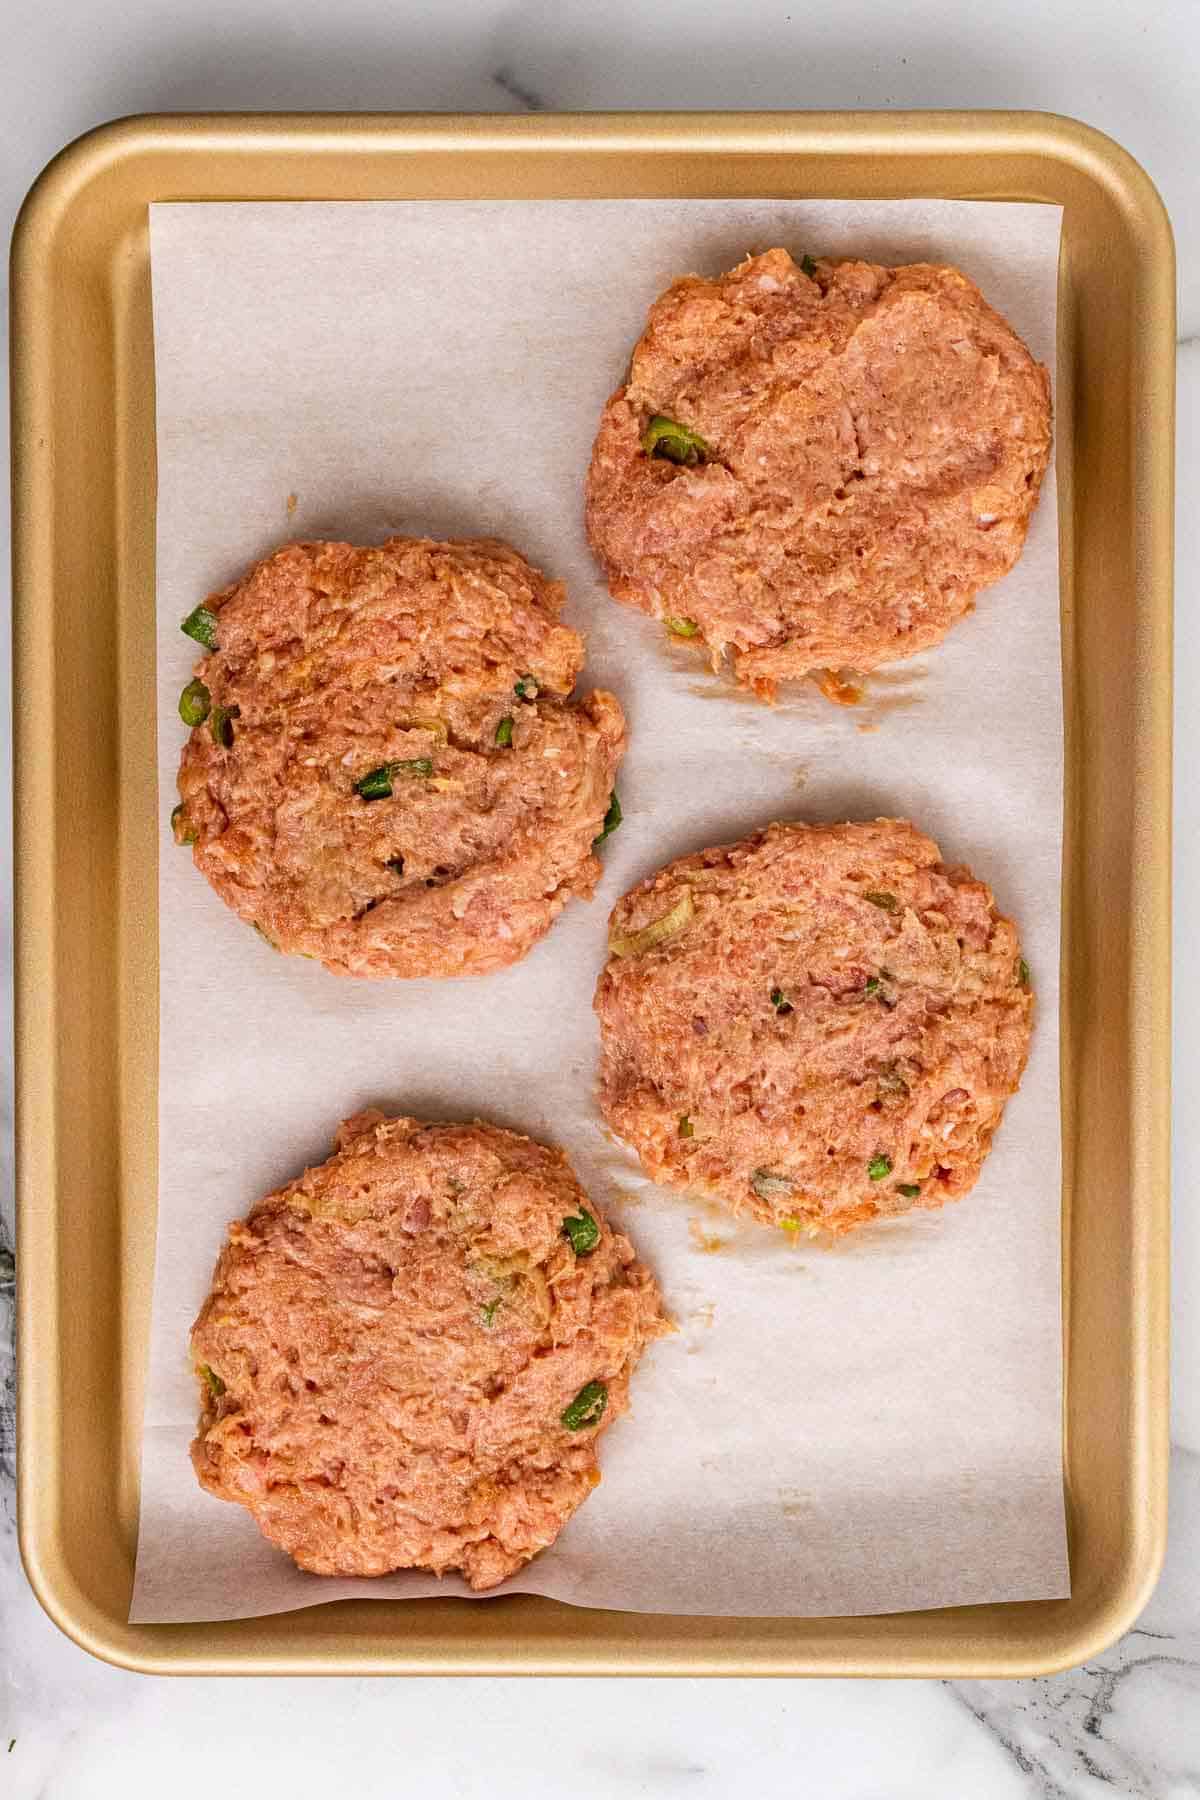 Four burger patties on a baking sheet